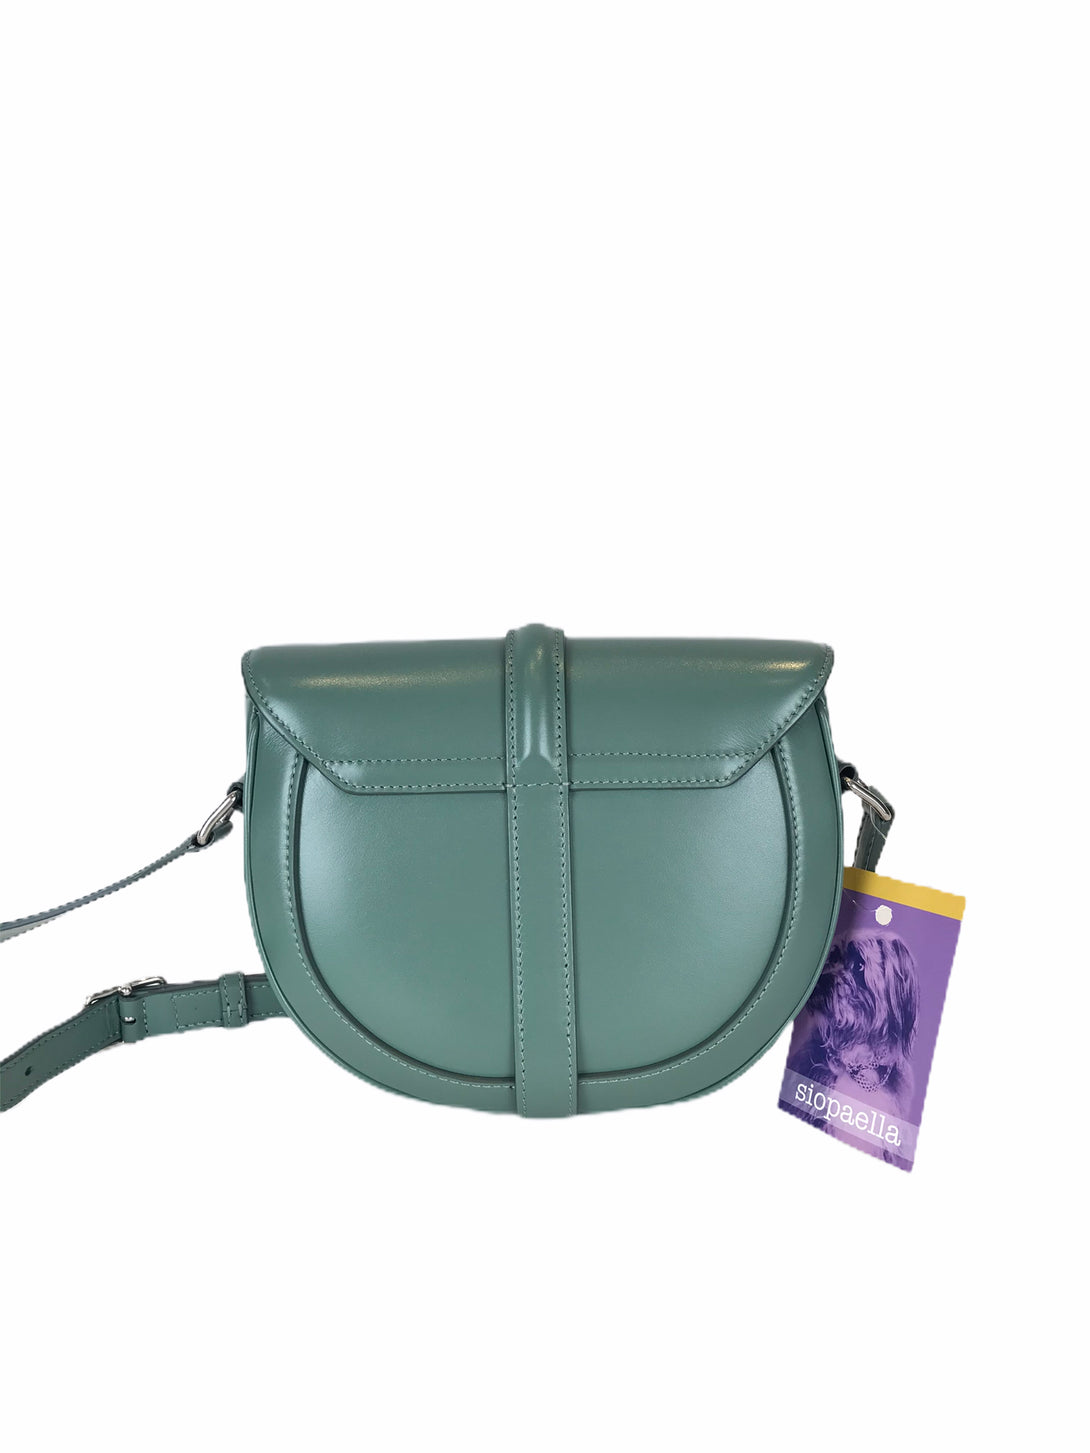 Celine Sage Green Leather “Besace” Mini Crossbody - Siopaella Designer Exchange